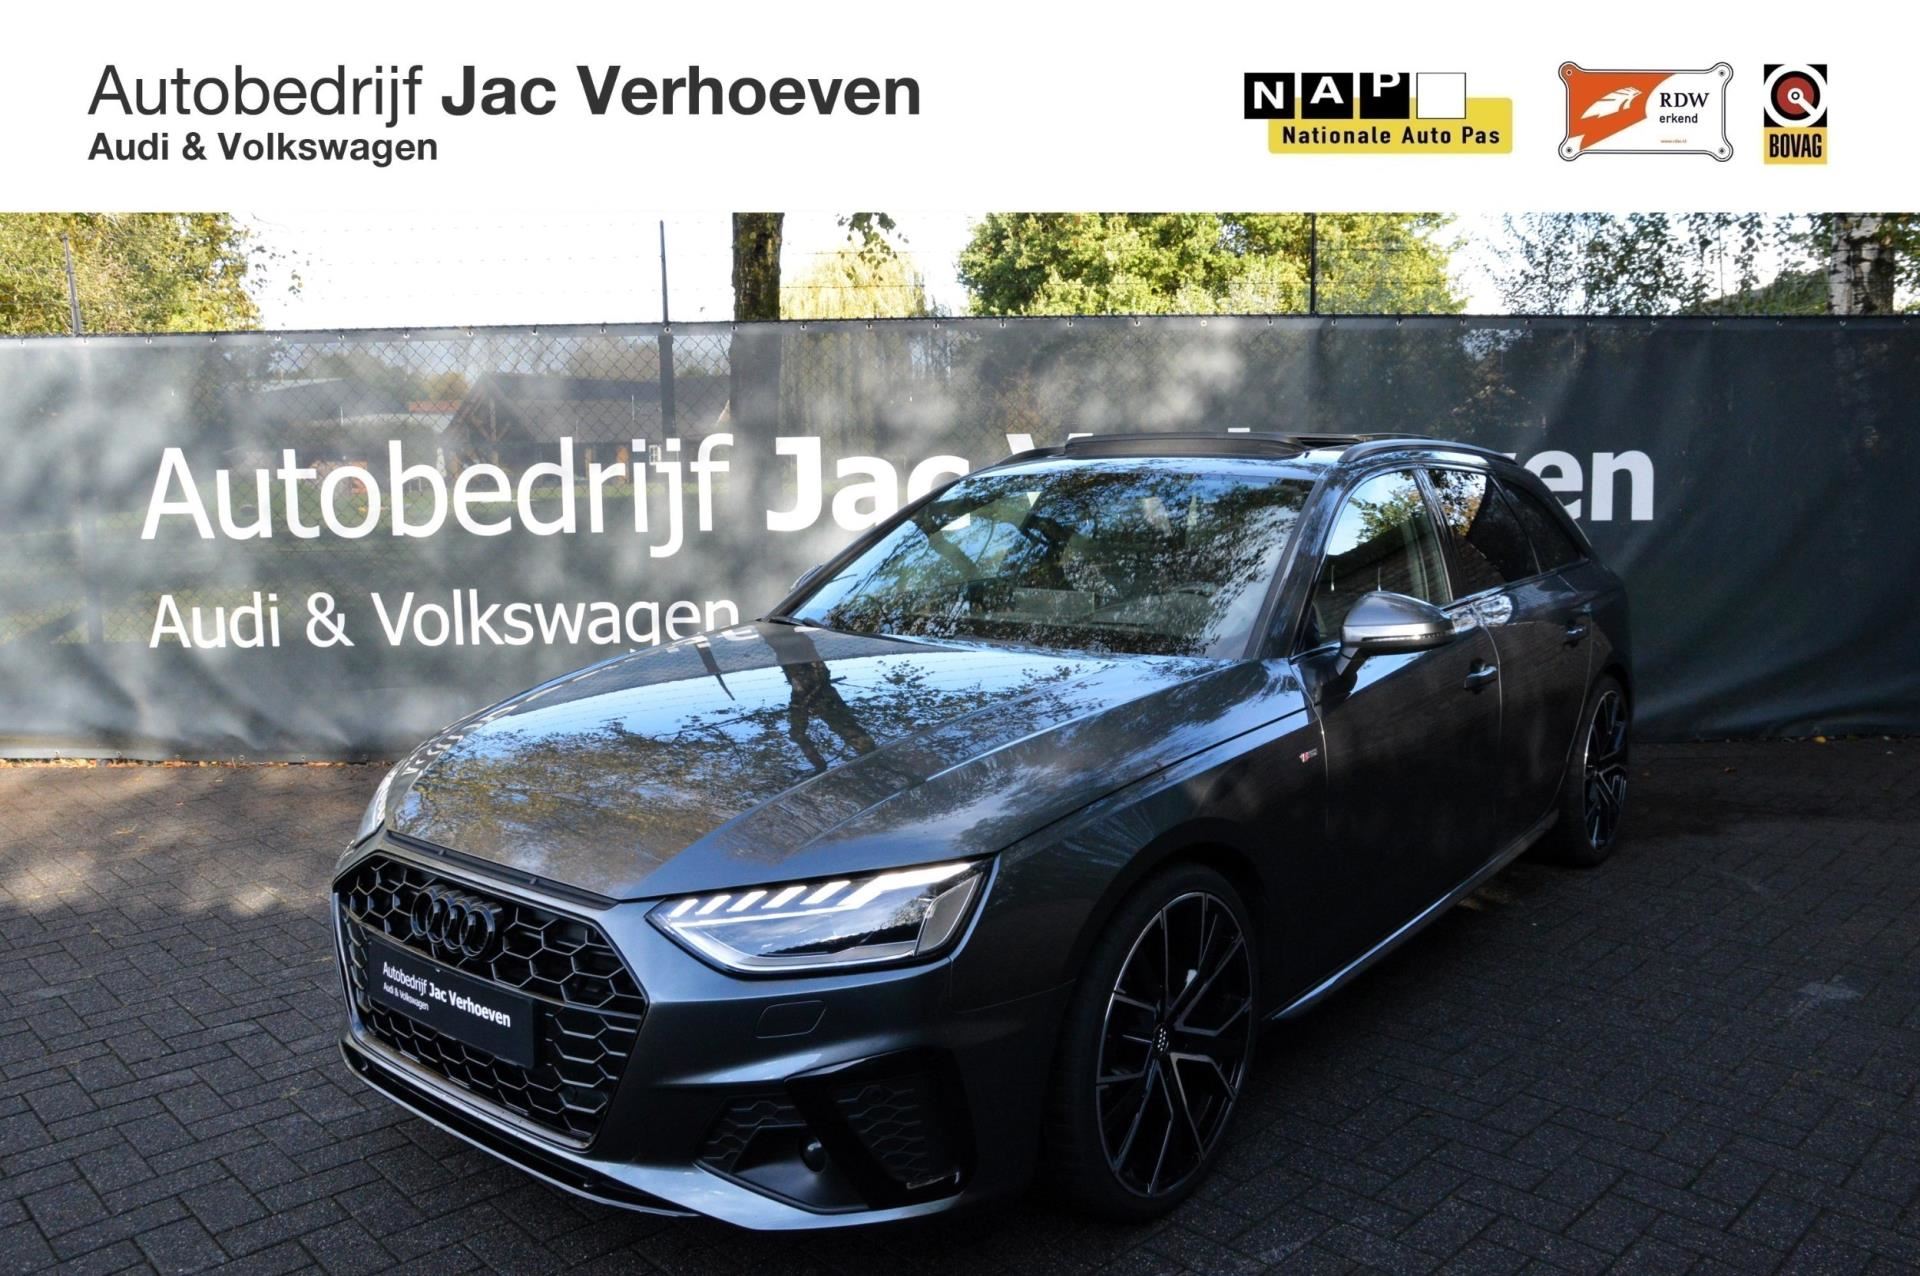 Audi A4 AVANT occasion - Autobedrijf Jac Verhoeven